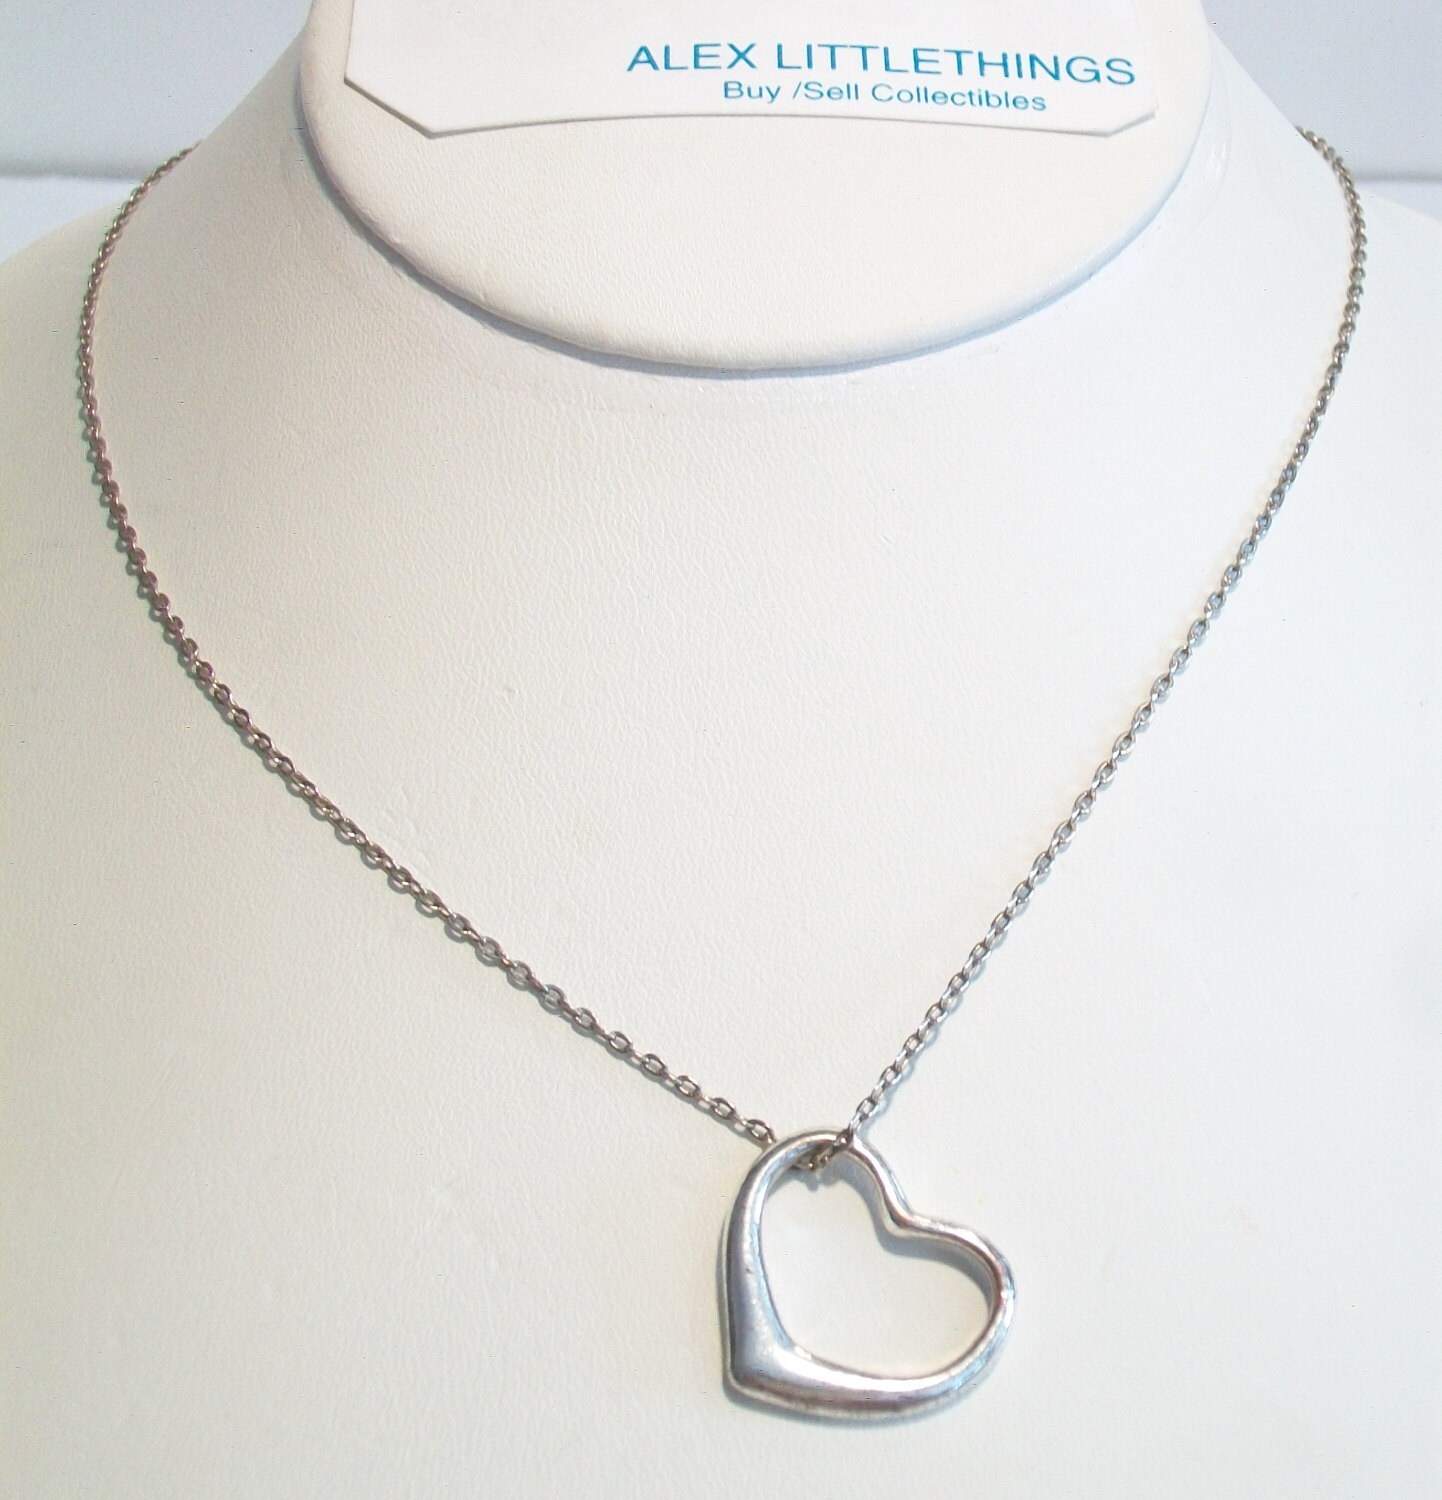 Classic Heart Silhouette Pendant Necklace Silver Tone | Etsy